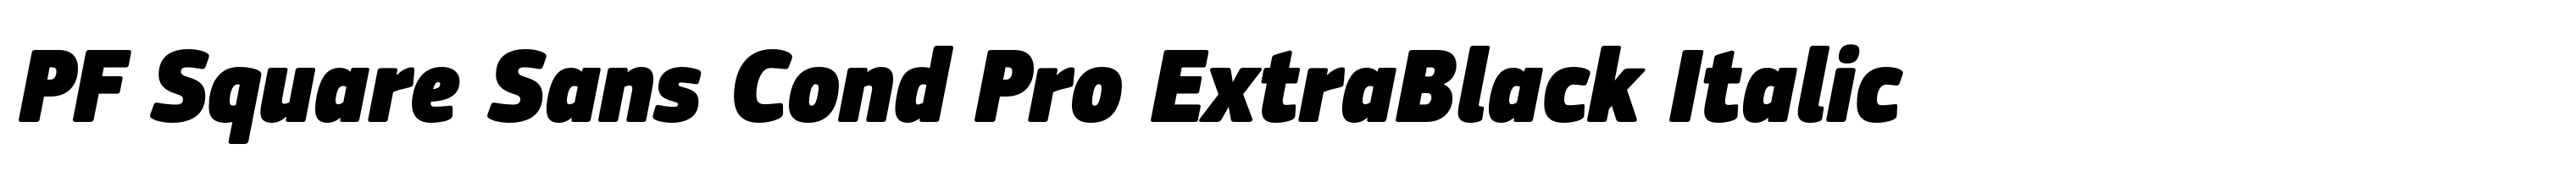 PF Square Sans Cond Pro ExtraBlack Italic